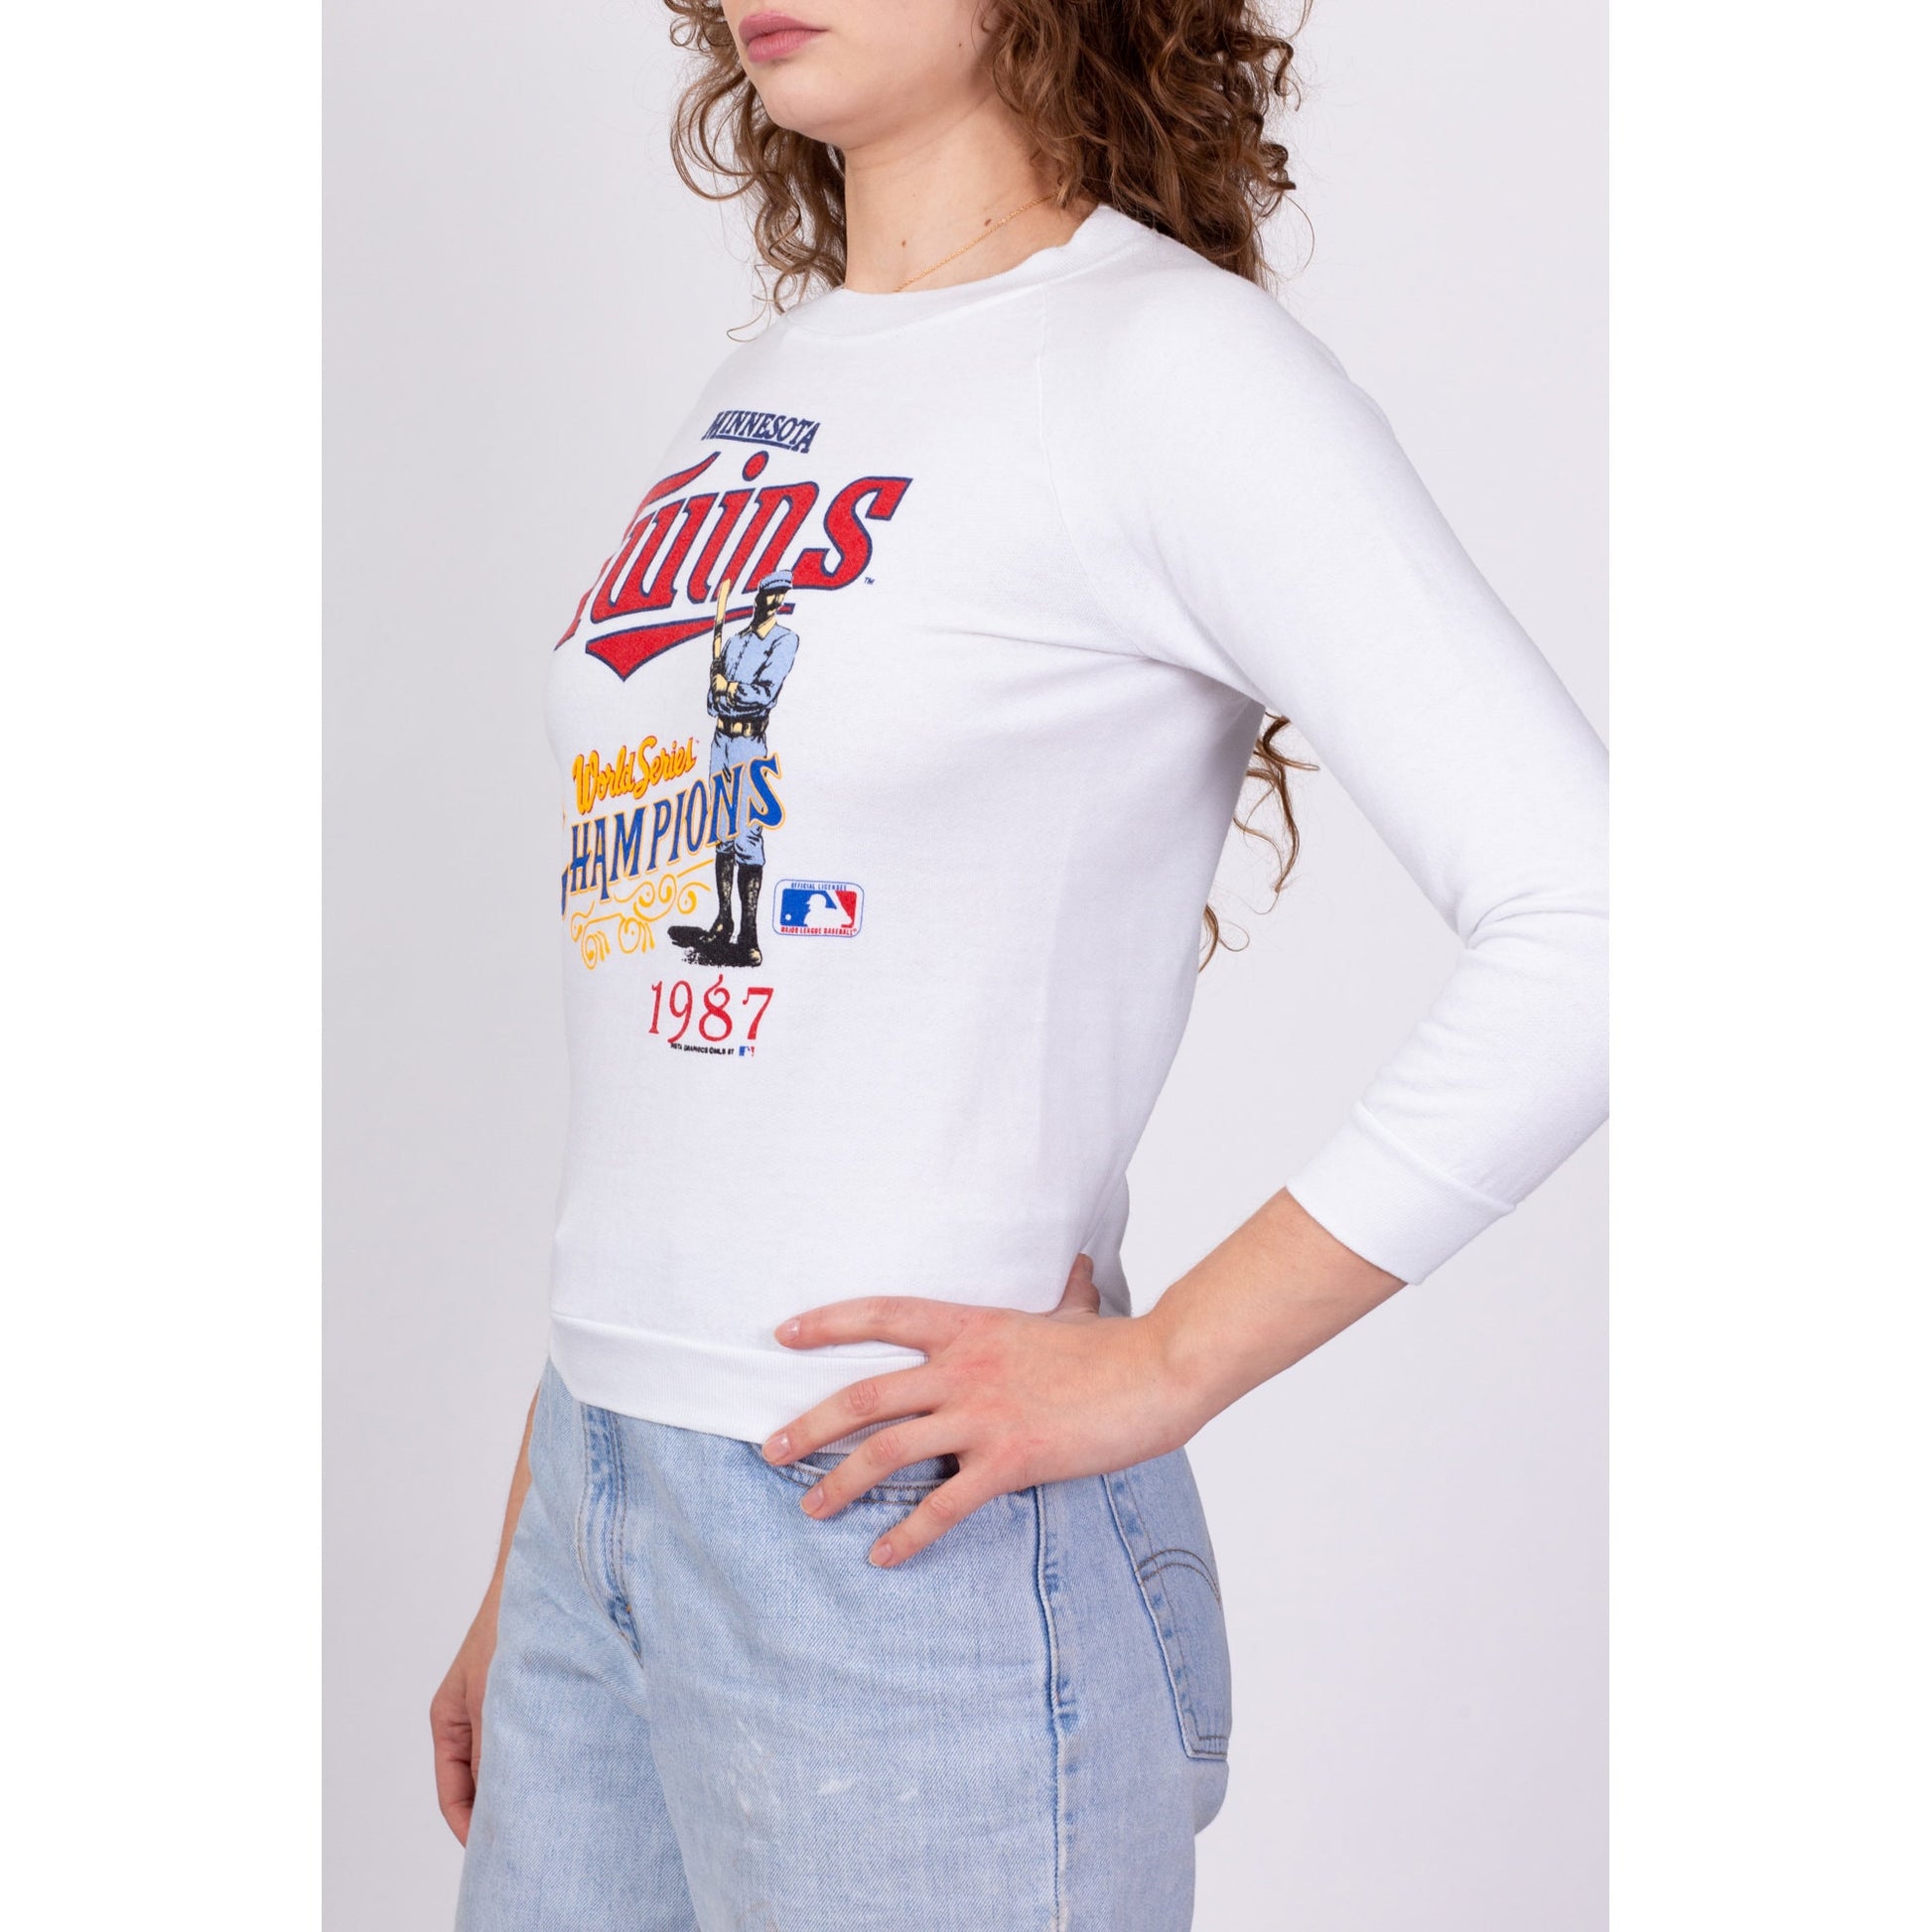 1987 Minnesota Twins World Series Sweatshirt - Petite Extra Small 